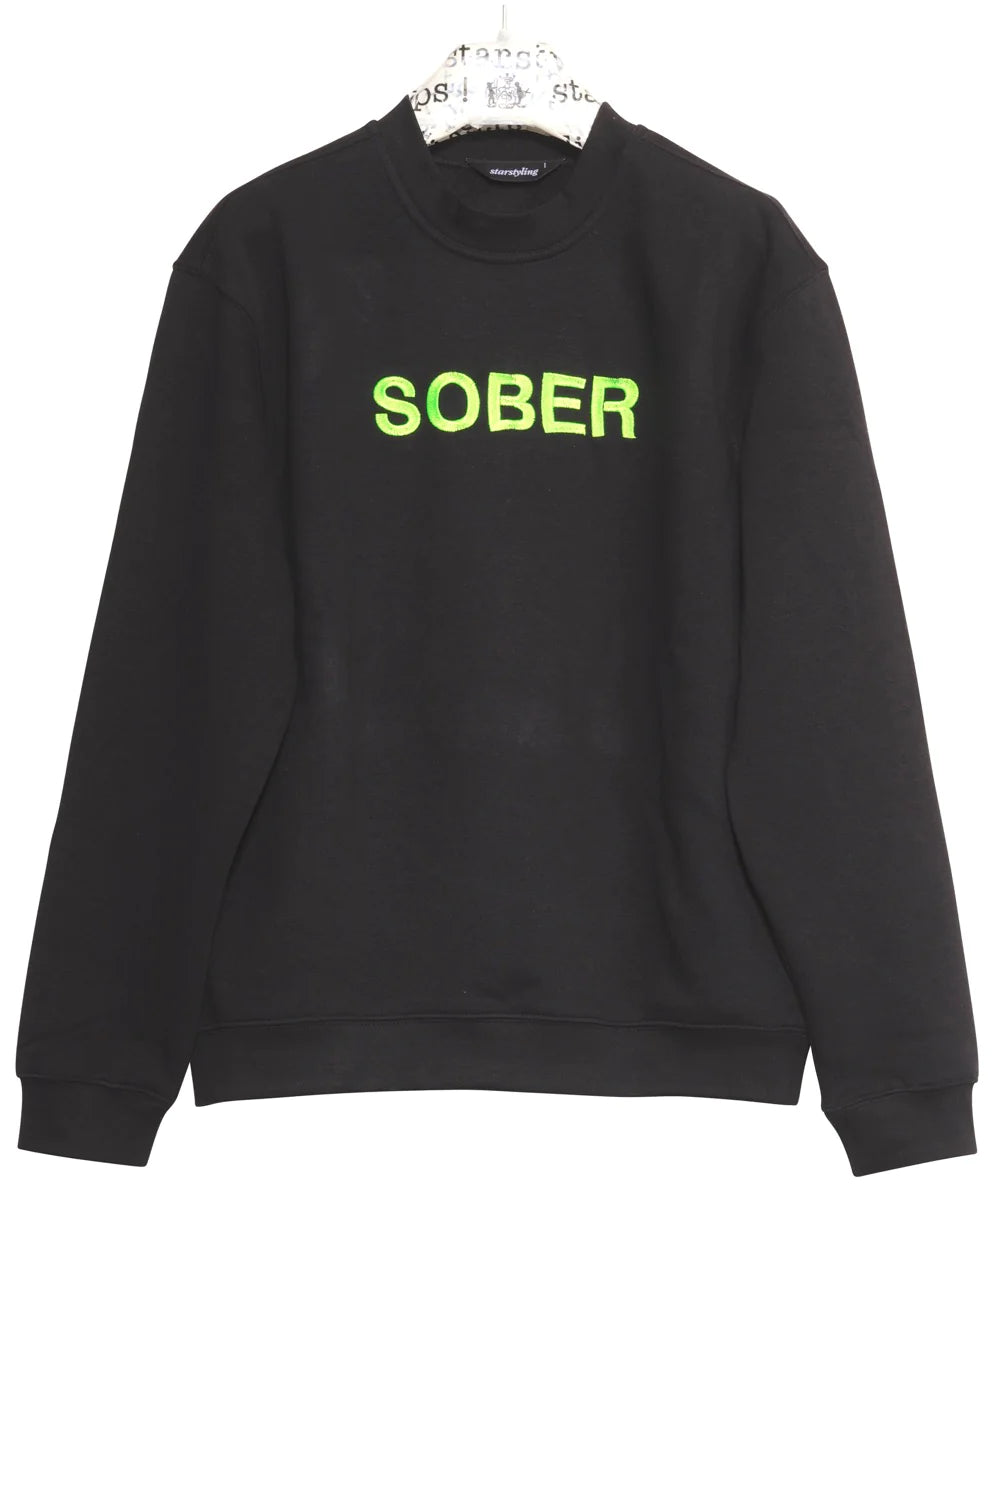 Sweatshirt "Sober" - black/green